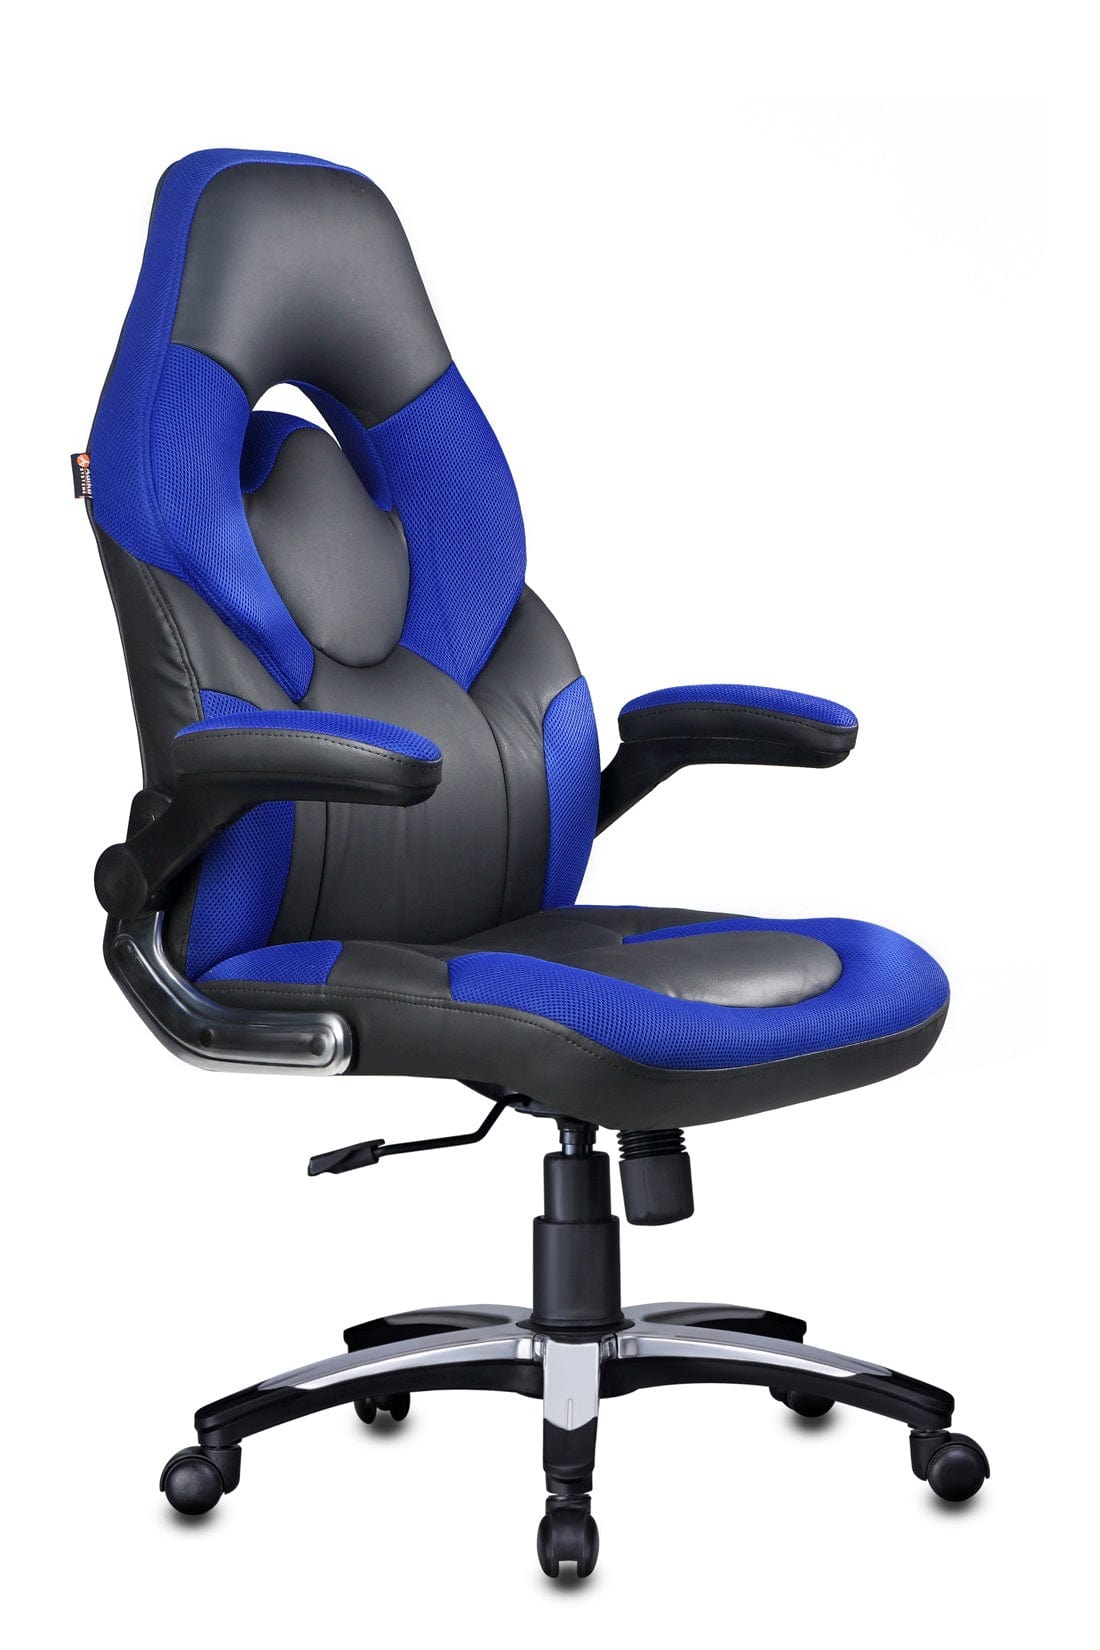 Stylish Designer chair in Black/Blue